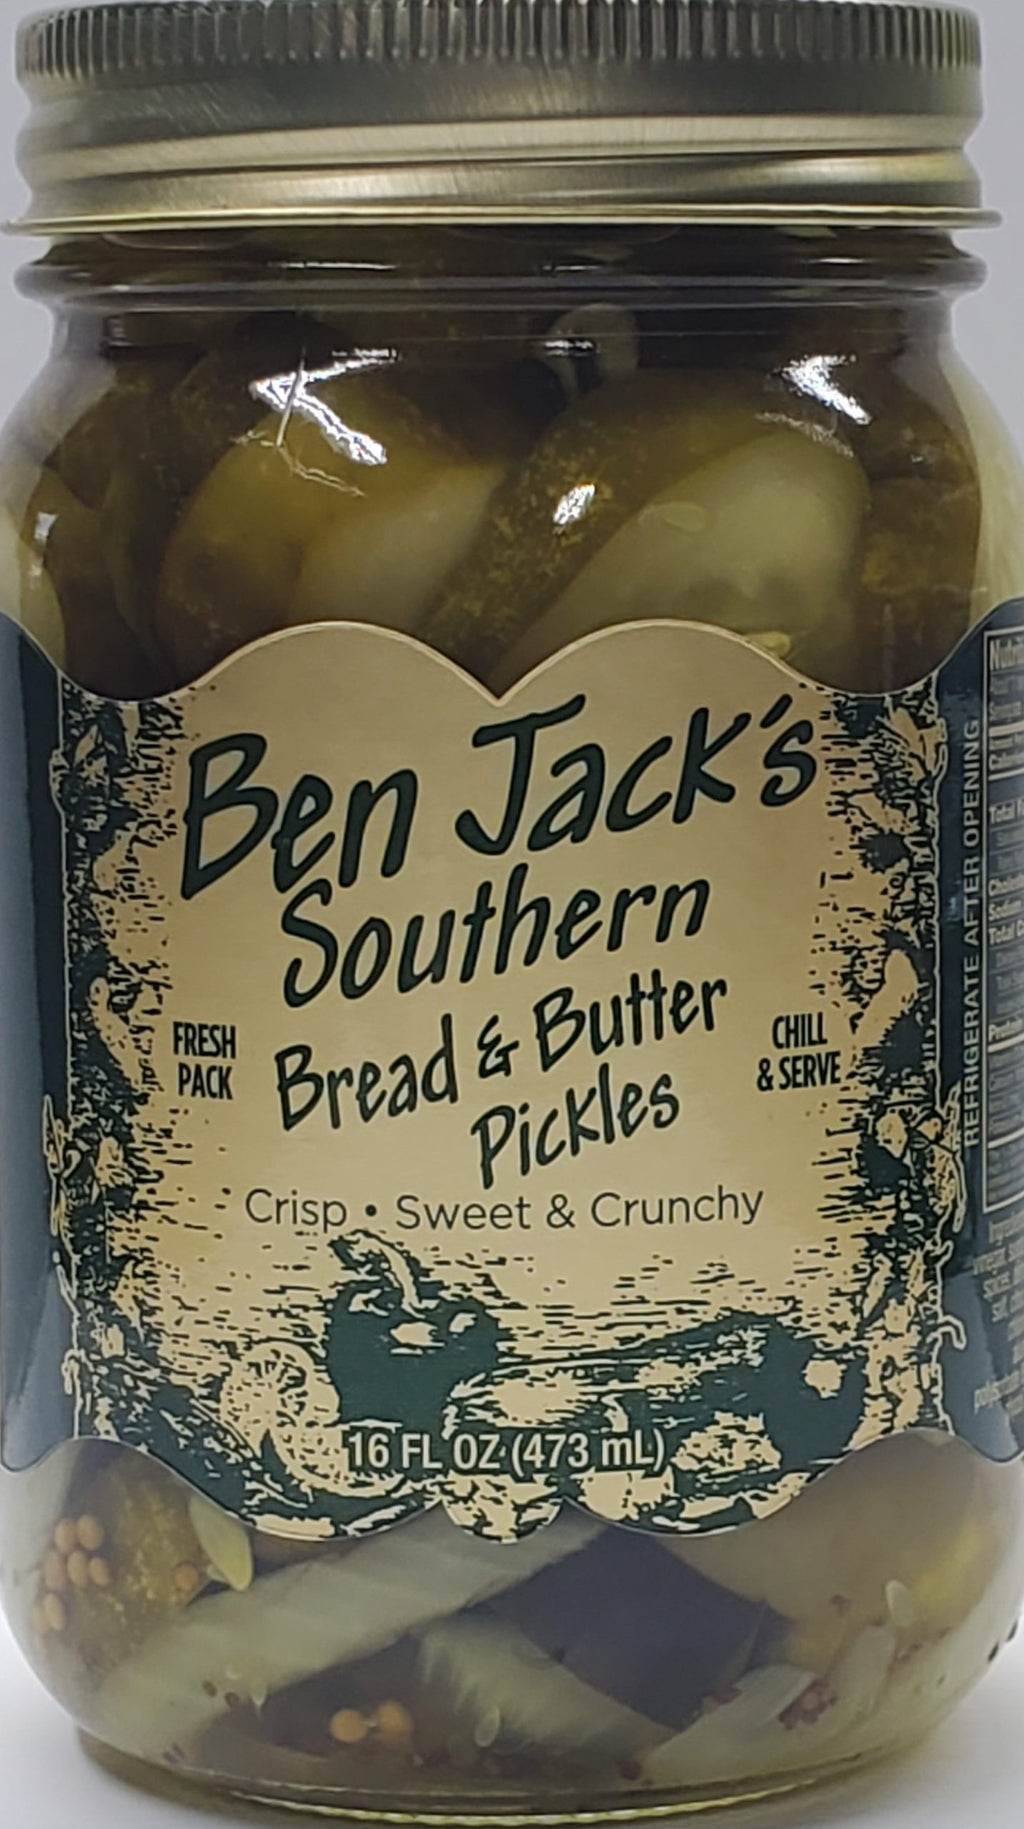 Ben Jack Larado's Southern Bread & Butter Pickles